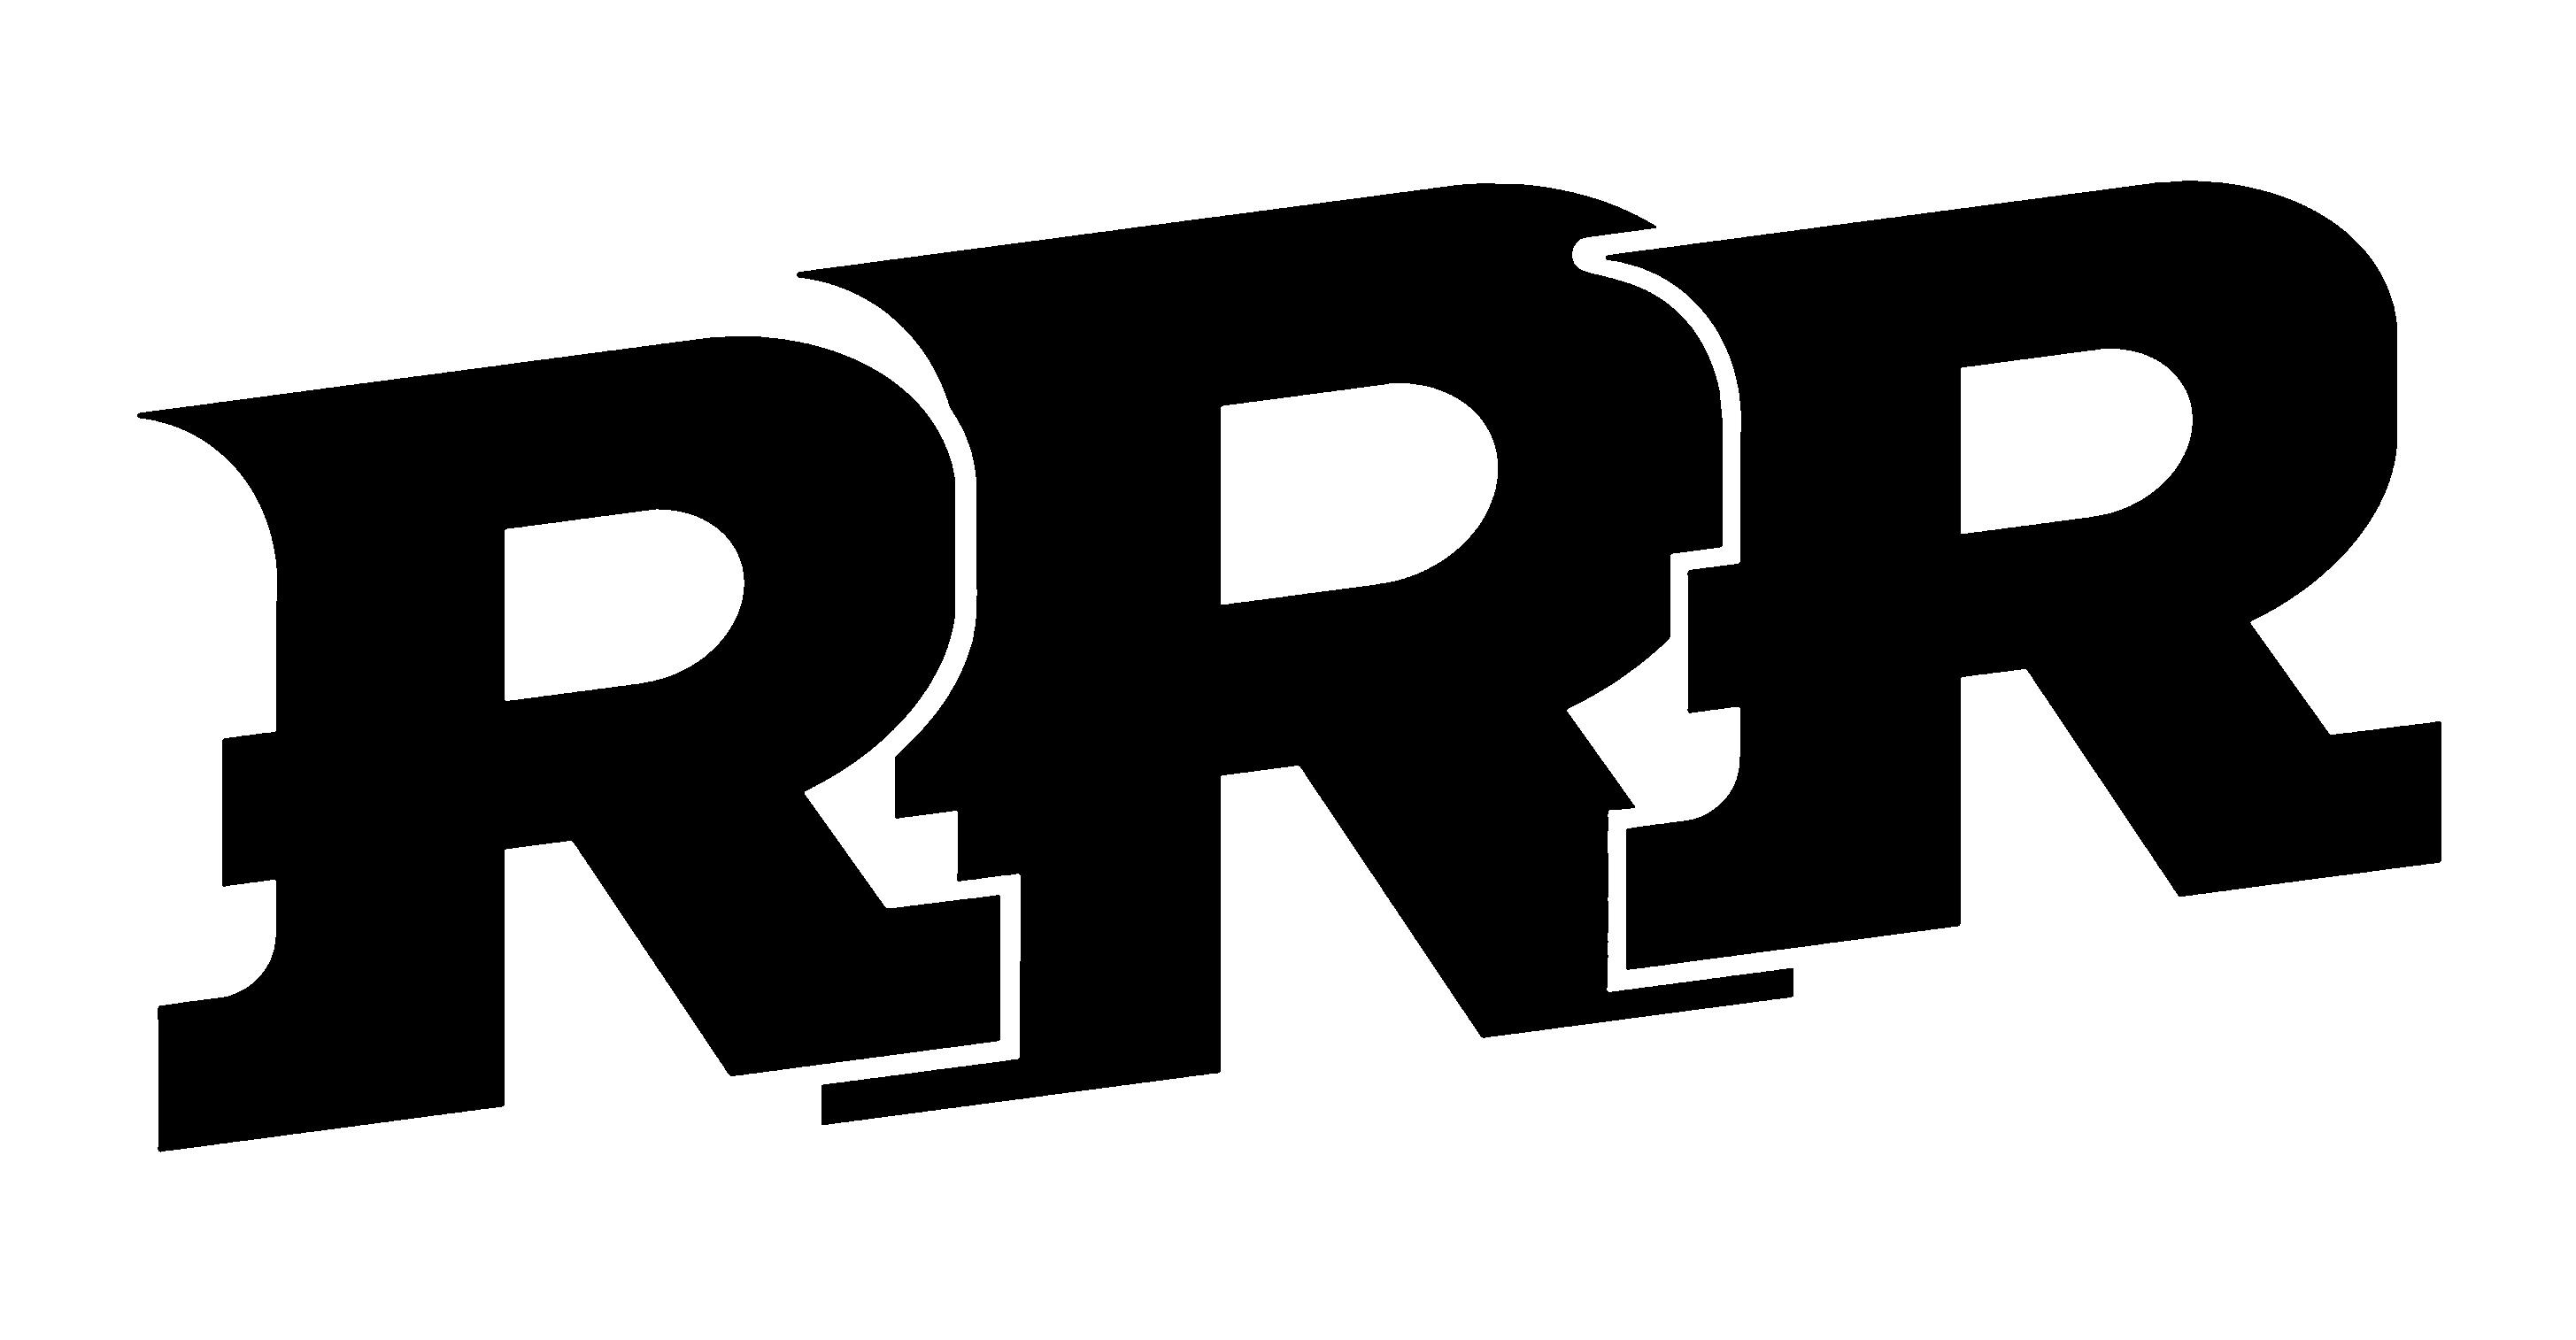 RRR Logo by SenpaiCreations on DeviantArt